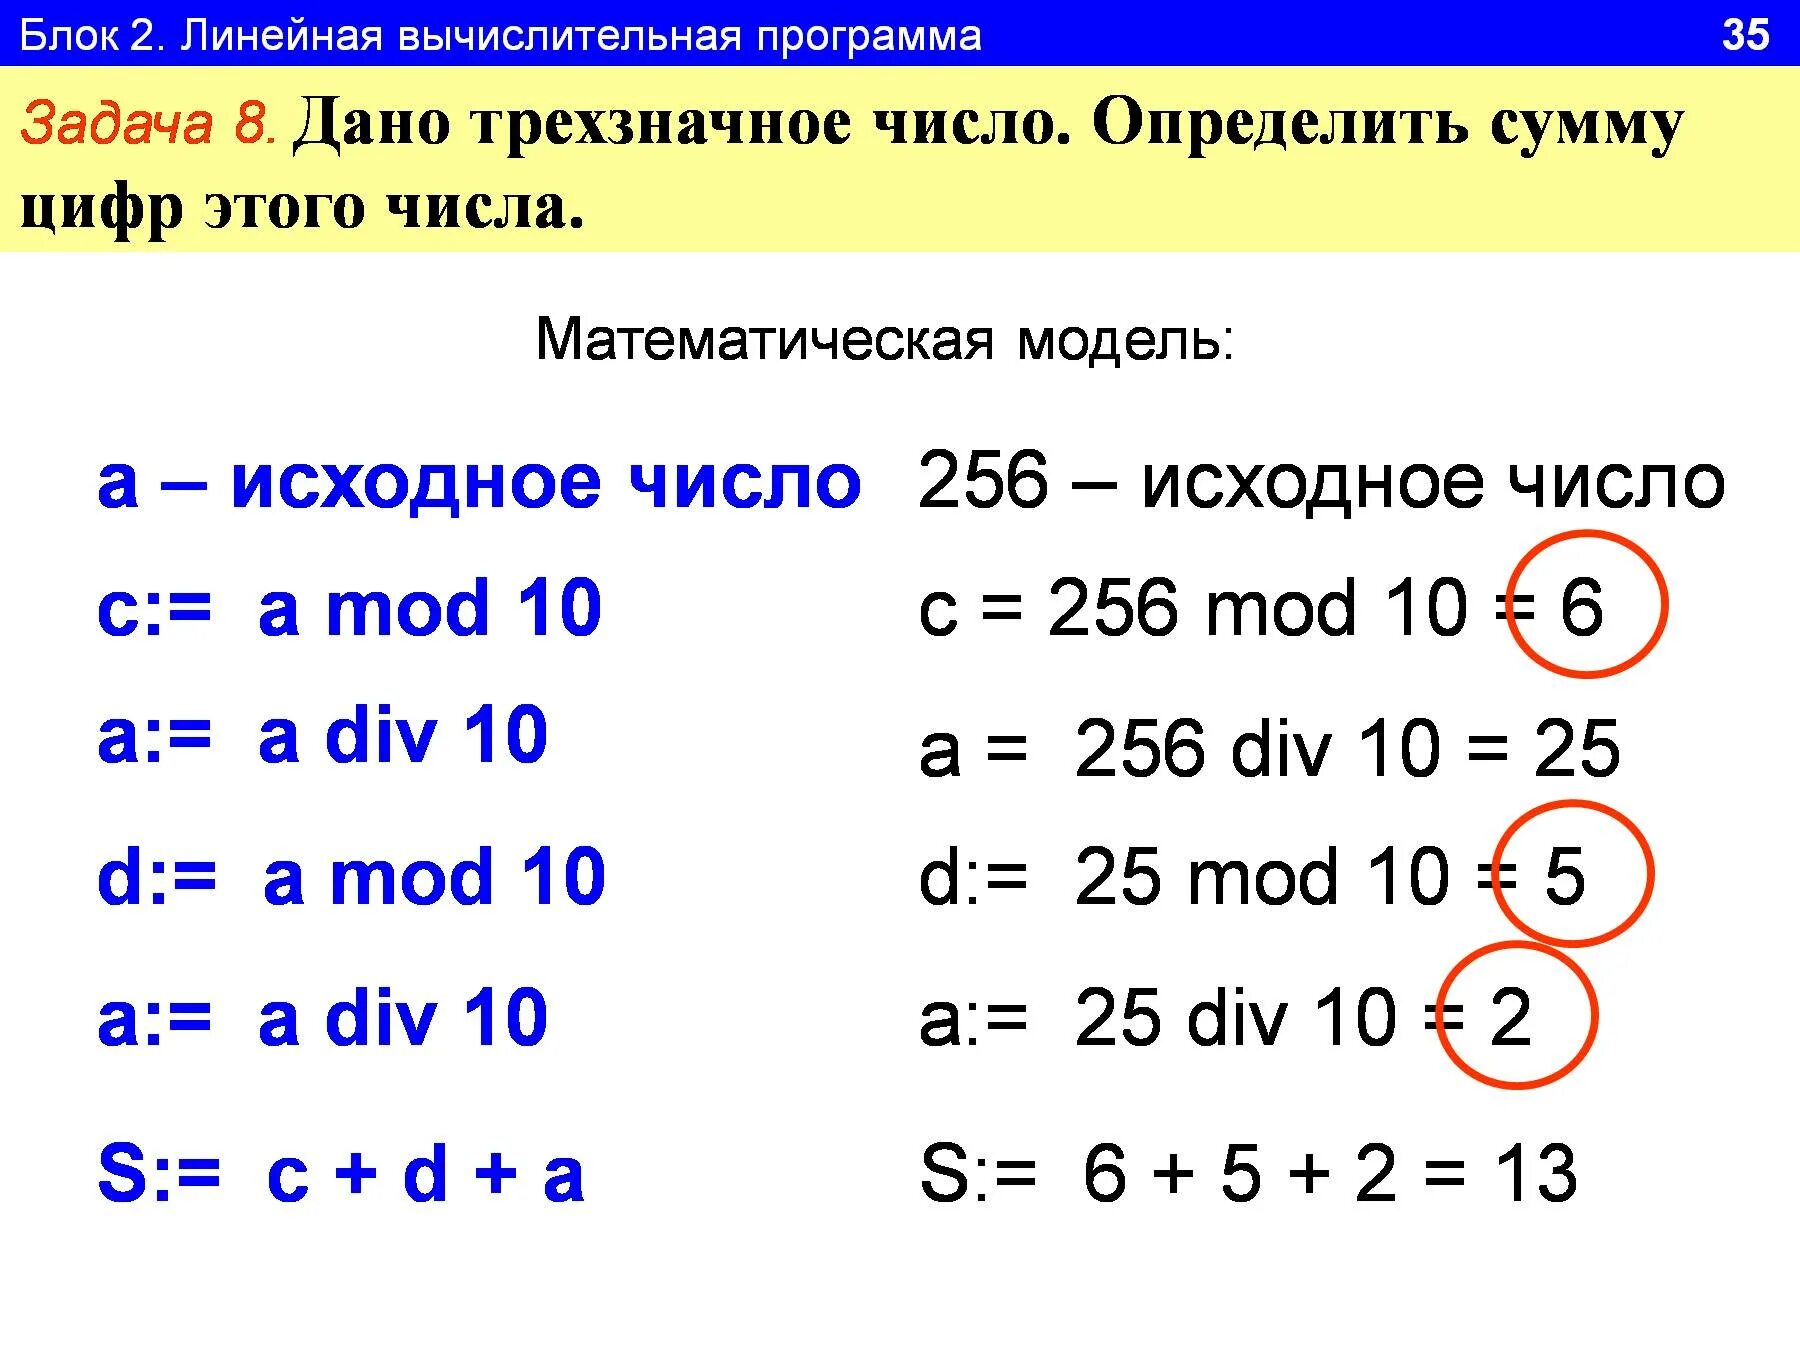 Произведение цифр трехзначного числа 315. Программа на Паскале сумма цифр трехзначного числа. Сумма цифр трехзначного числа Pascal. Сумма цифр Информатика. Программа найти сумму цифр трехзначного числа.